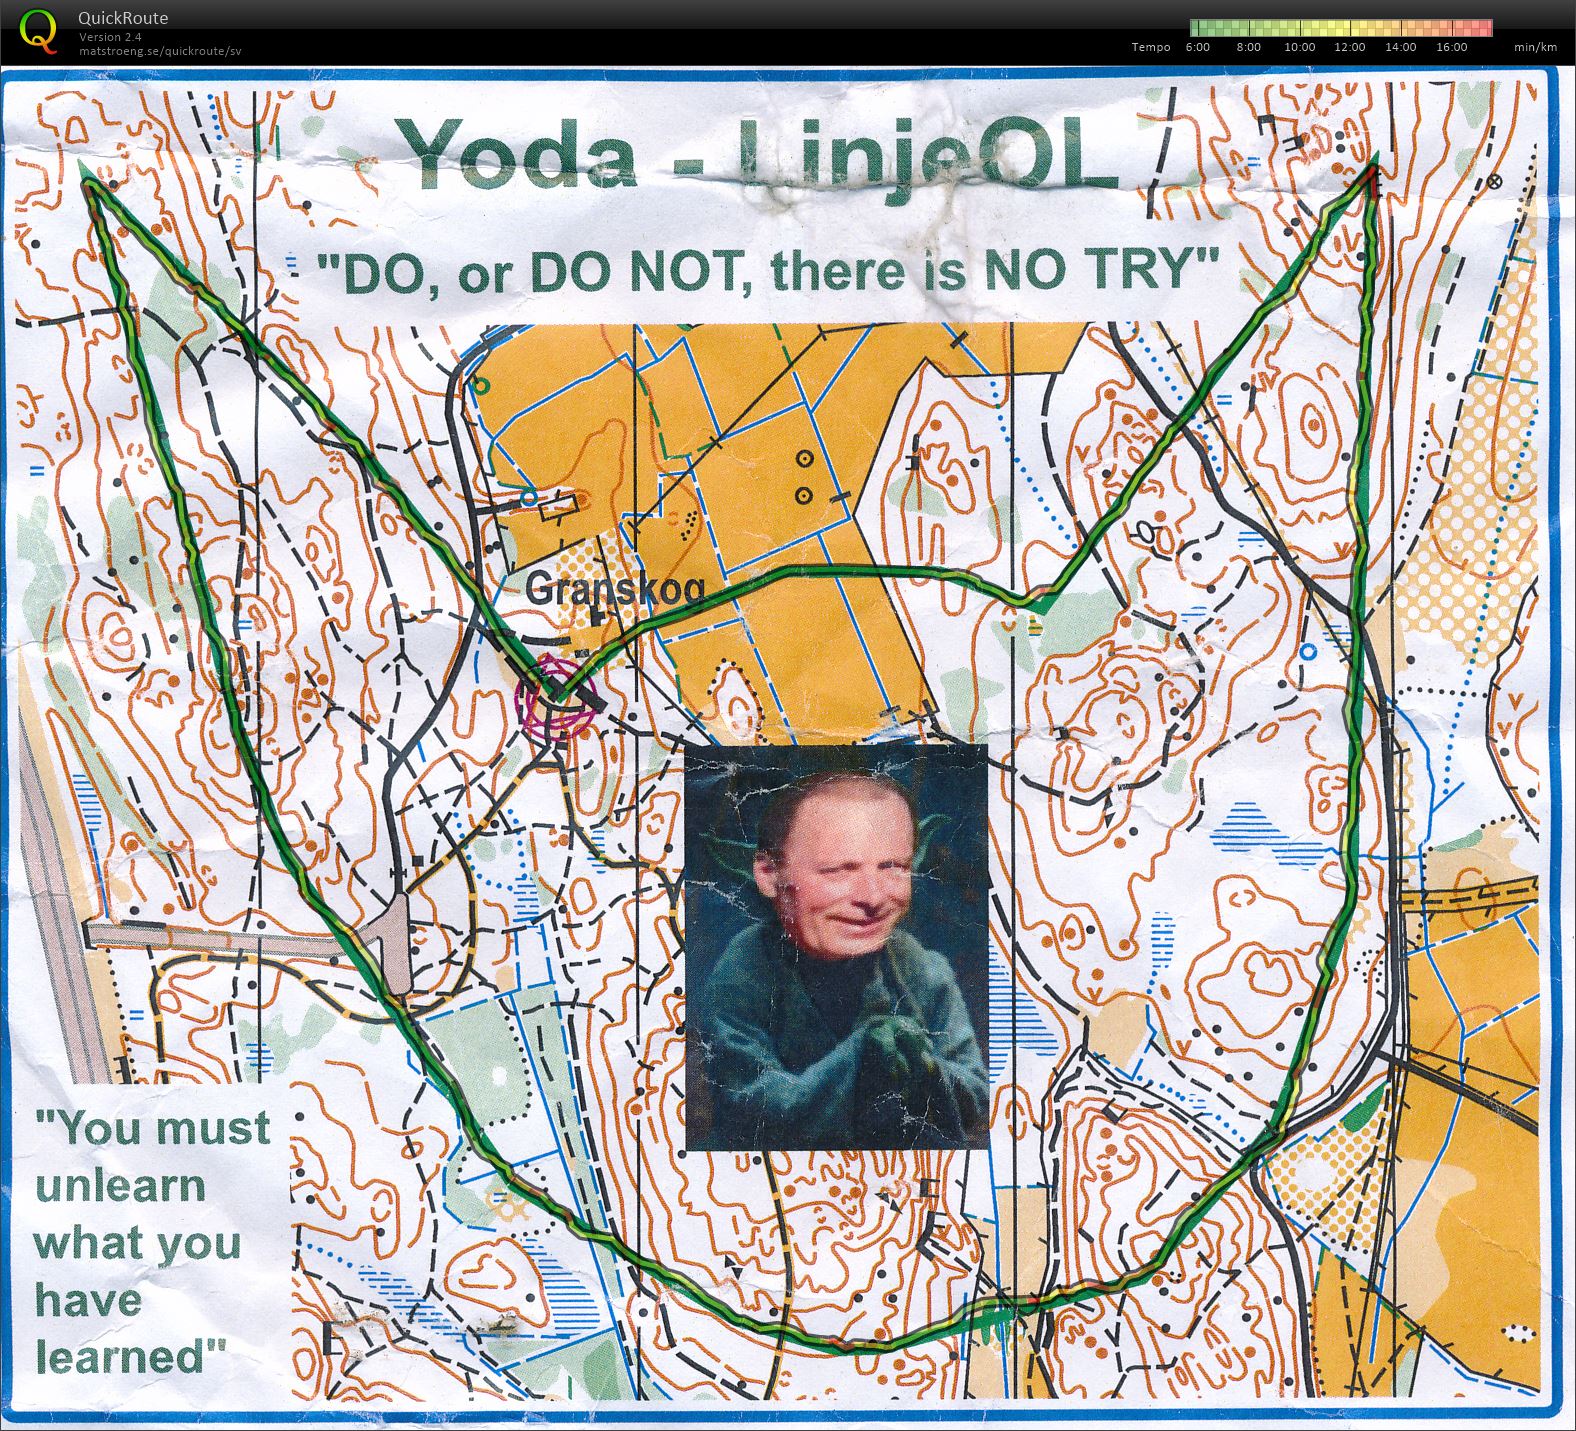 Yoda - linjeOL (18.06.2016)